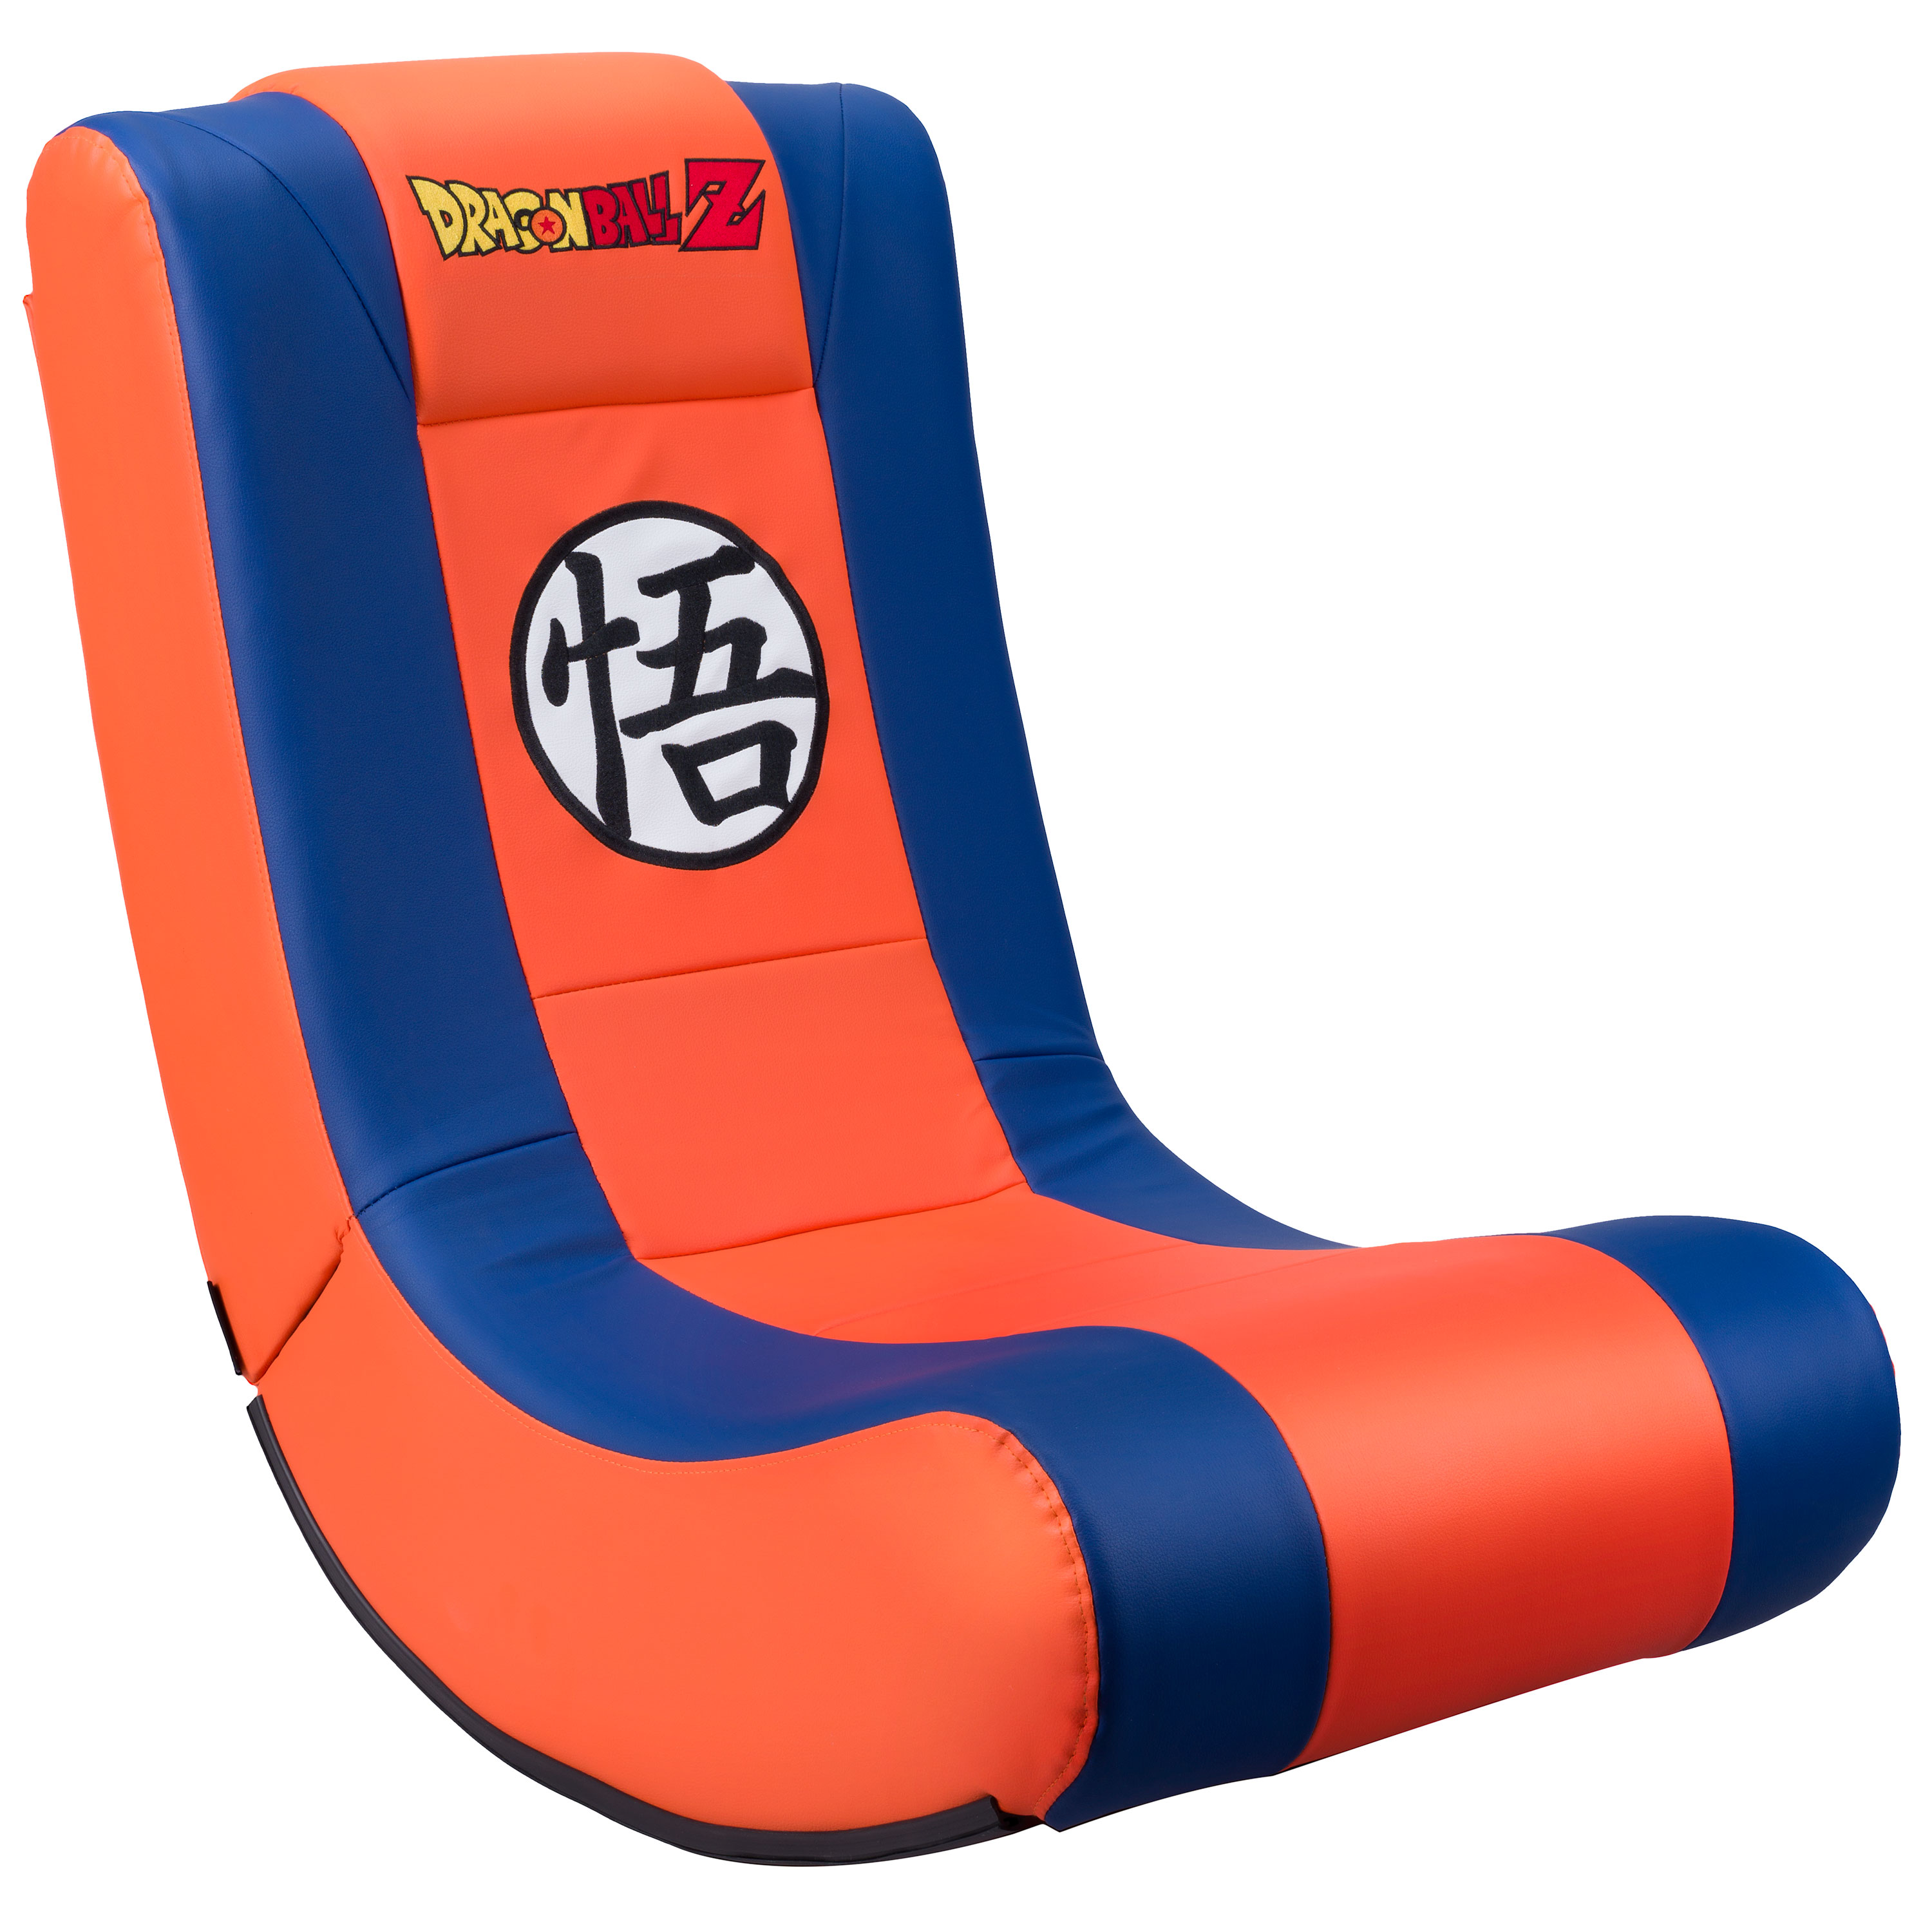 Rocking Chair Dragon Ball Z | Subsonic